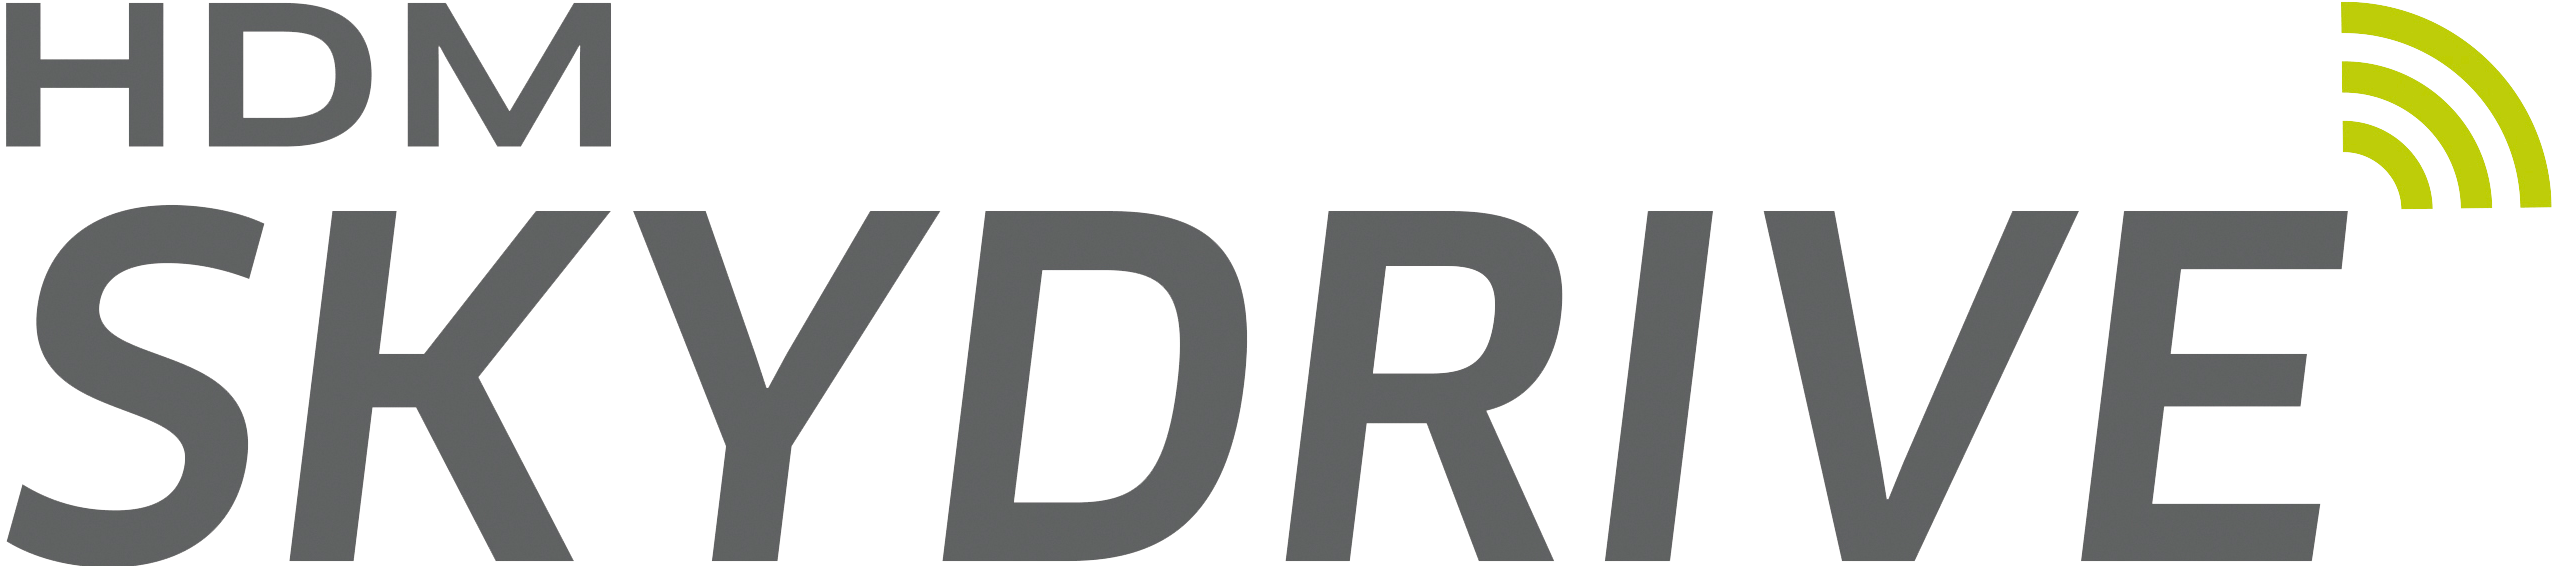 SkyDrive Logo - Welcome - HDM SkyDrive